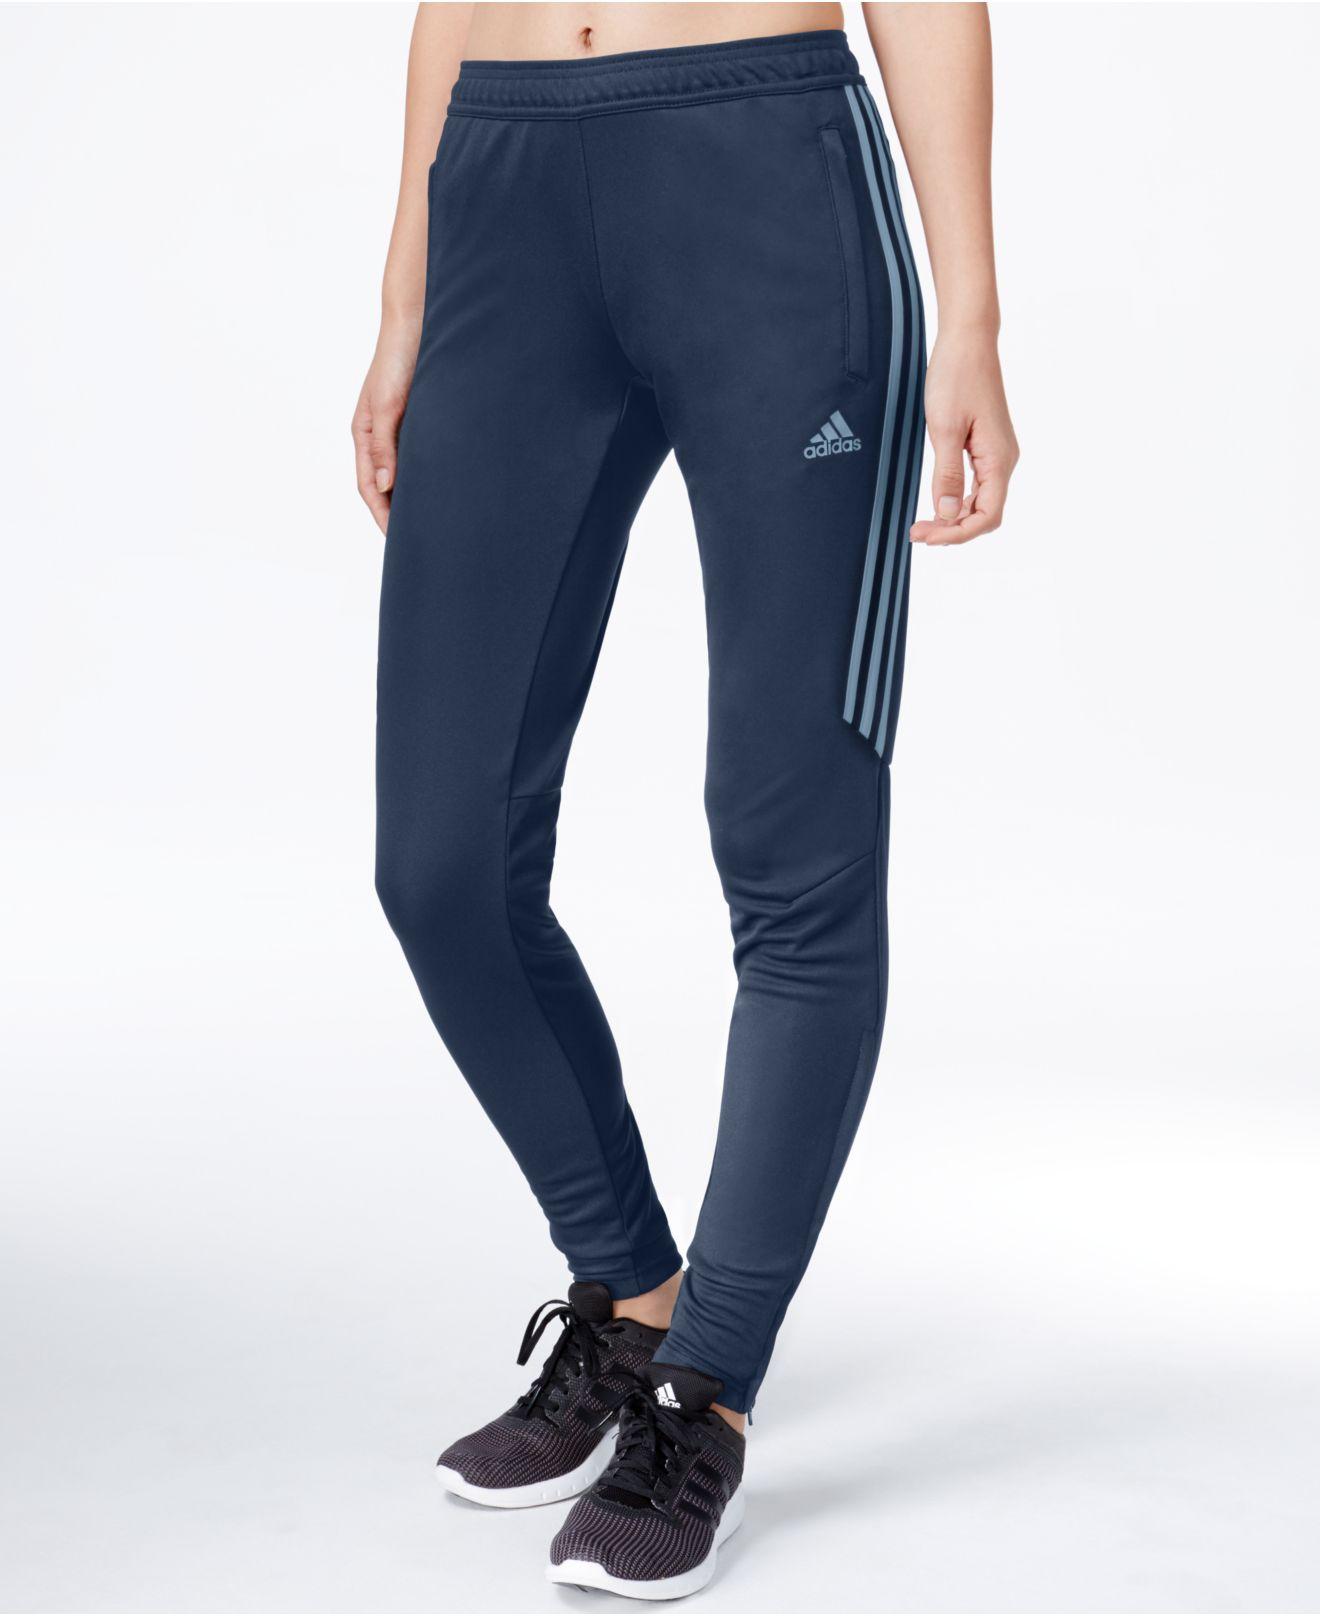 Lyst - Adidas Originals Tiro Climacool Soccer Pants in Blue